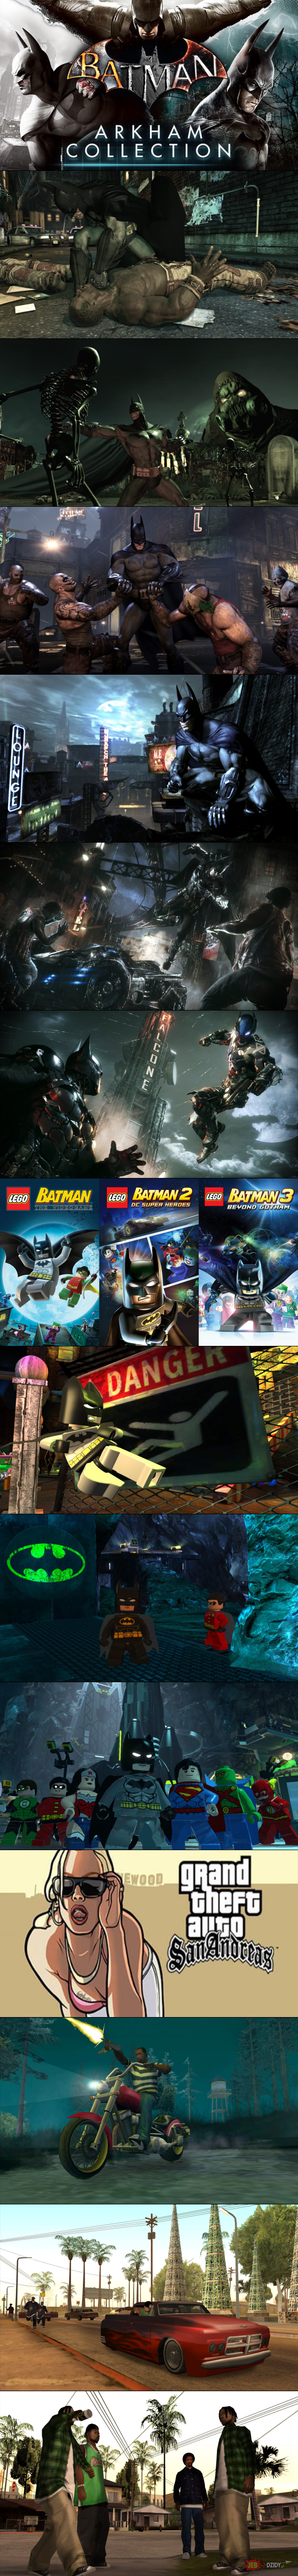 Batman: Arkham Collection, Lego Batman Trilogy i Grand Theft Auto: San Andreas za darmo